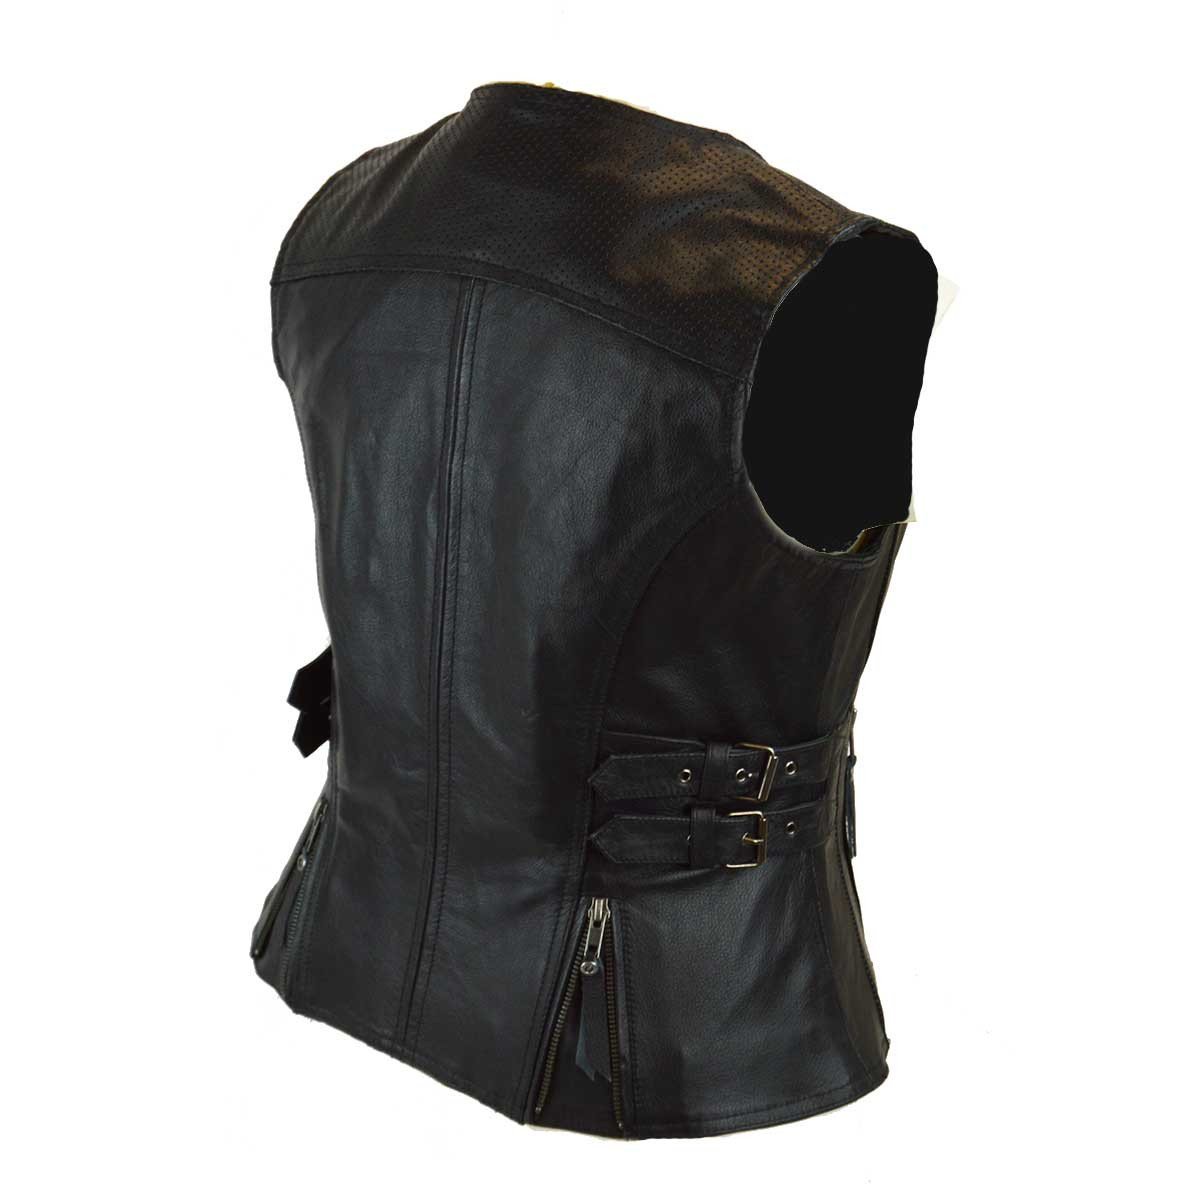 Vance Leather Ladies Black Vest with Buckles